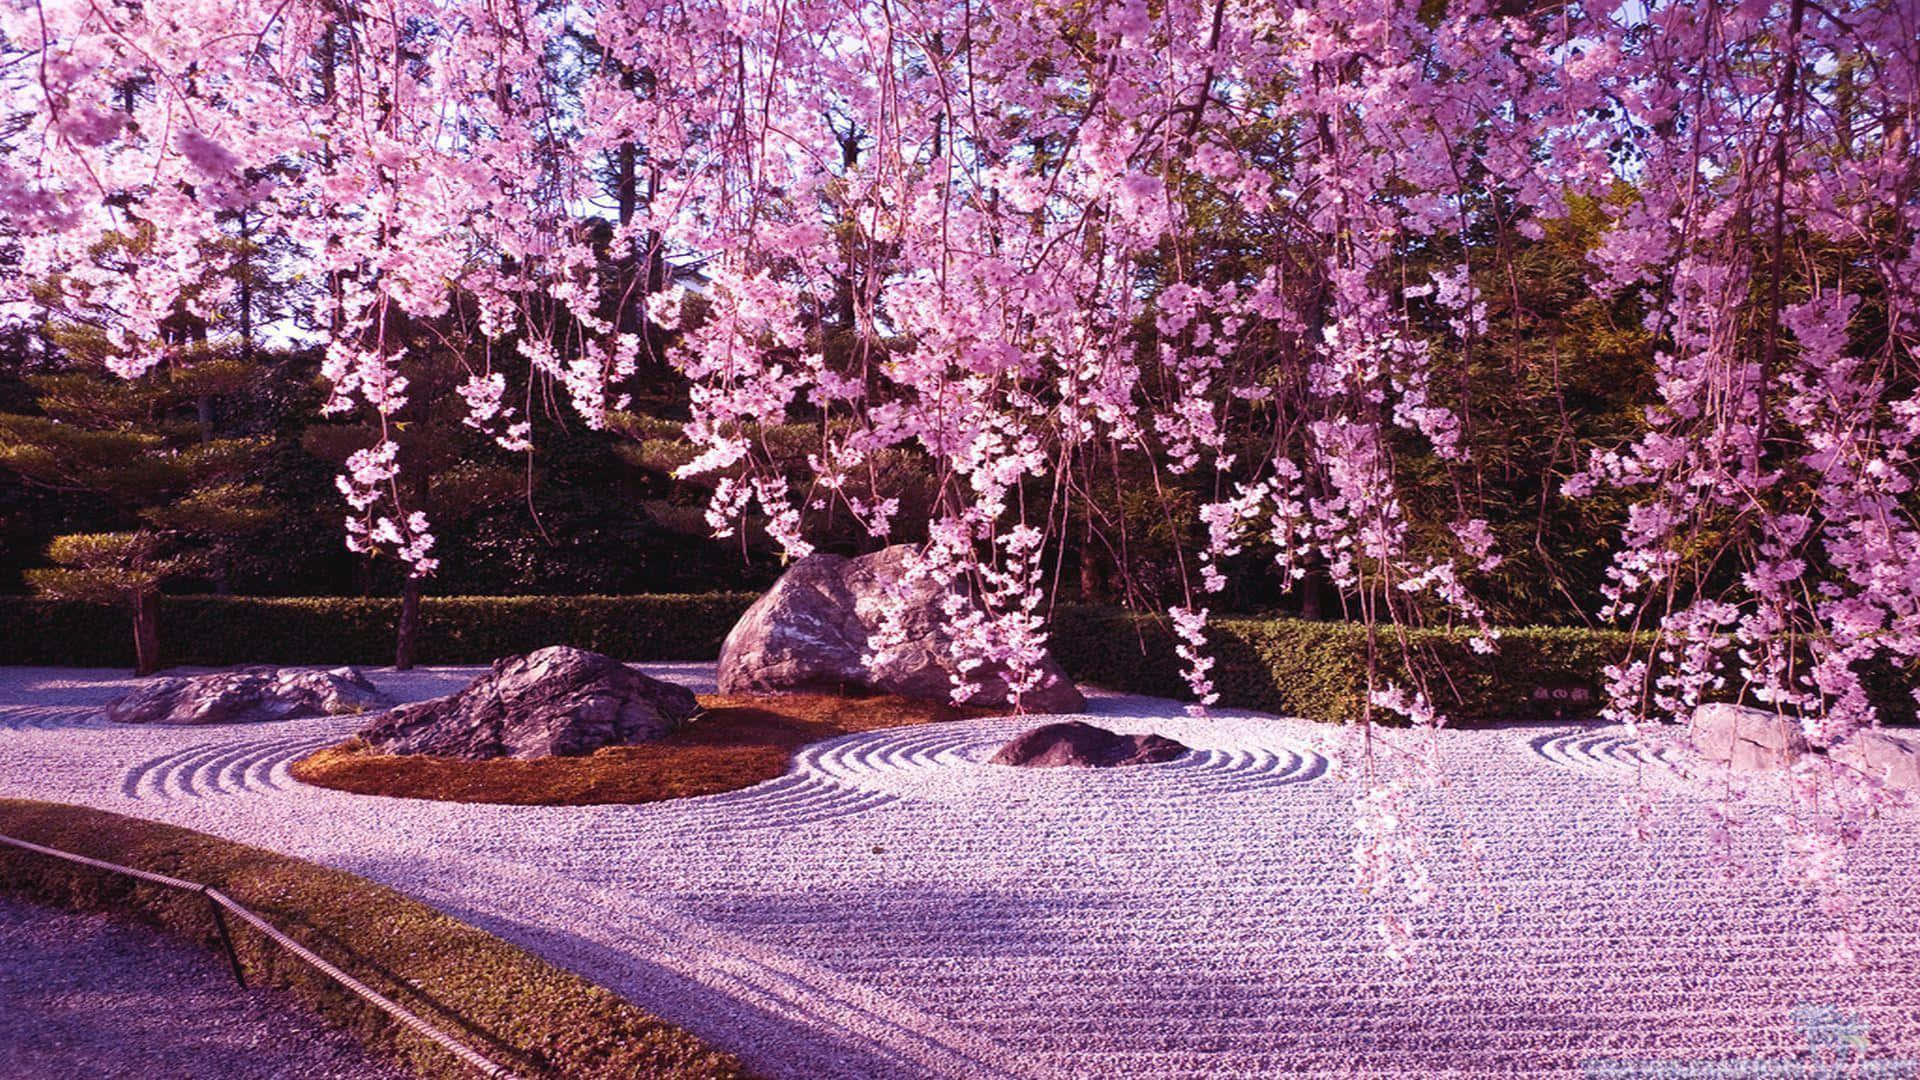 Spectacular view of a sakura tree in full bloom